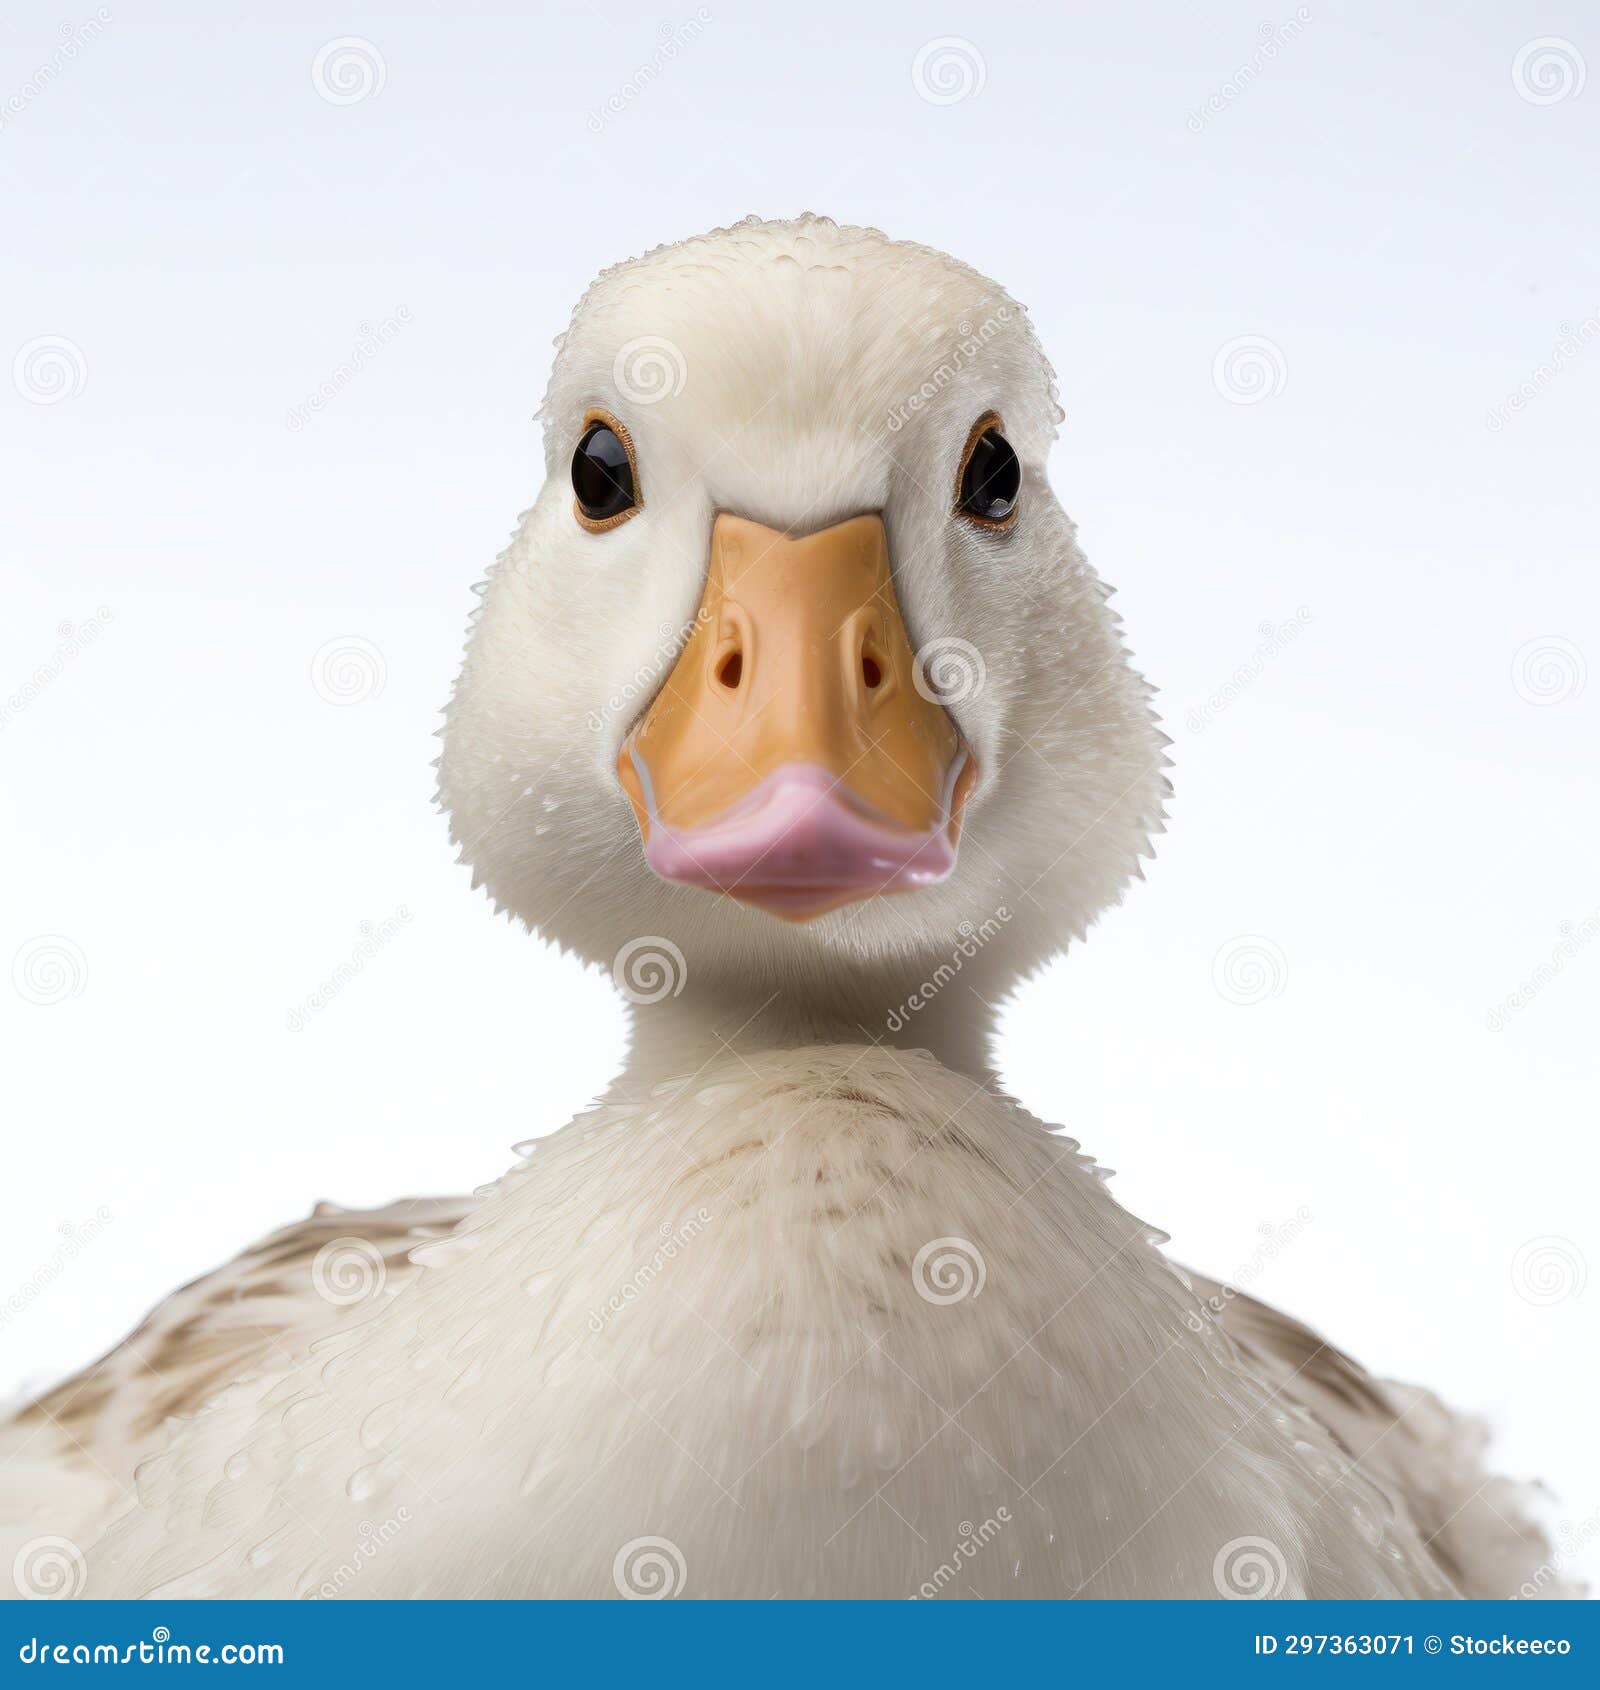 duck head on white background: medium format lens style